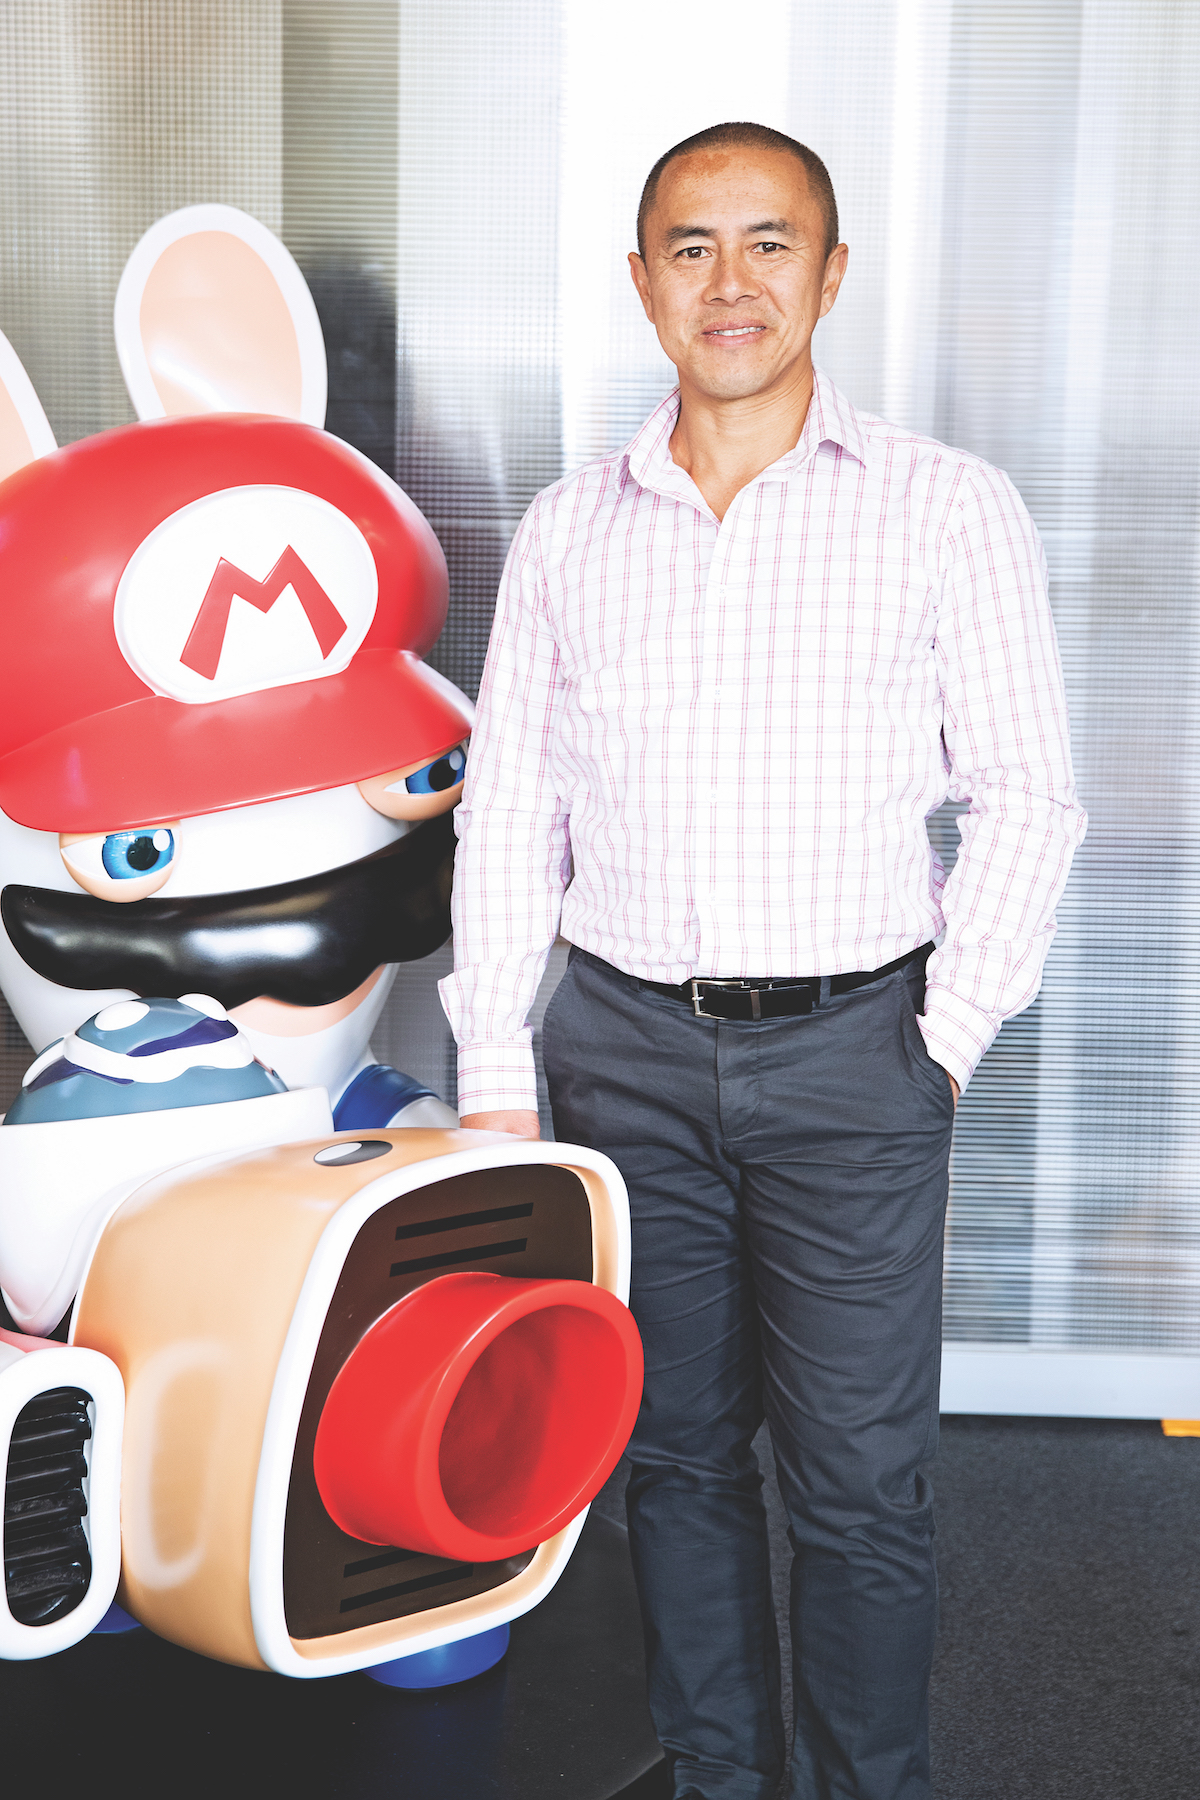 Edward Fong, Managing Director, Australia and New Zealand of Ubisoft Australia